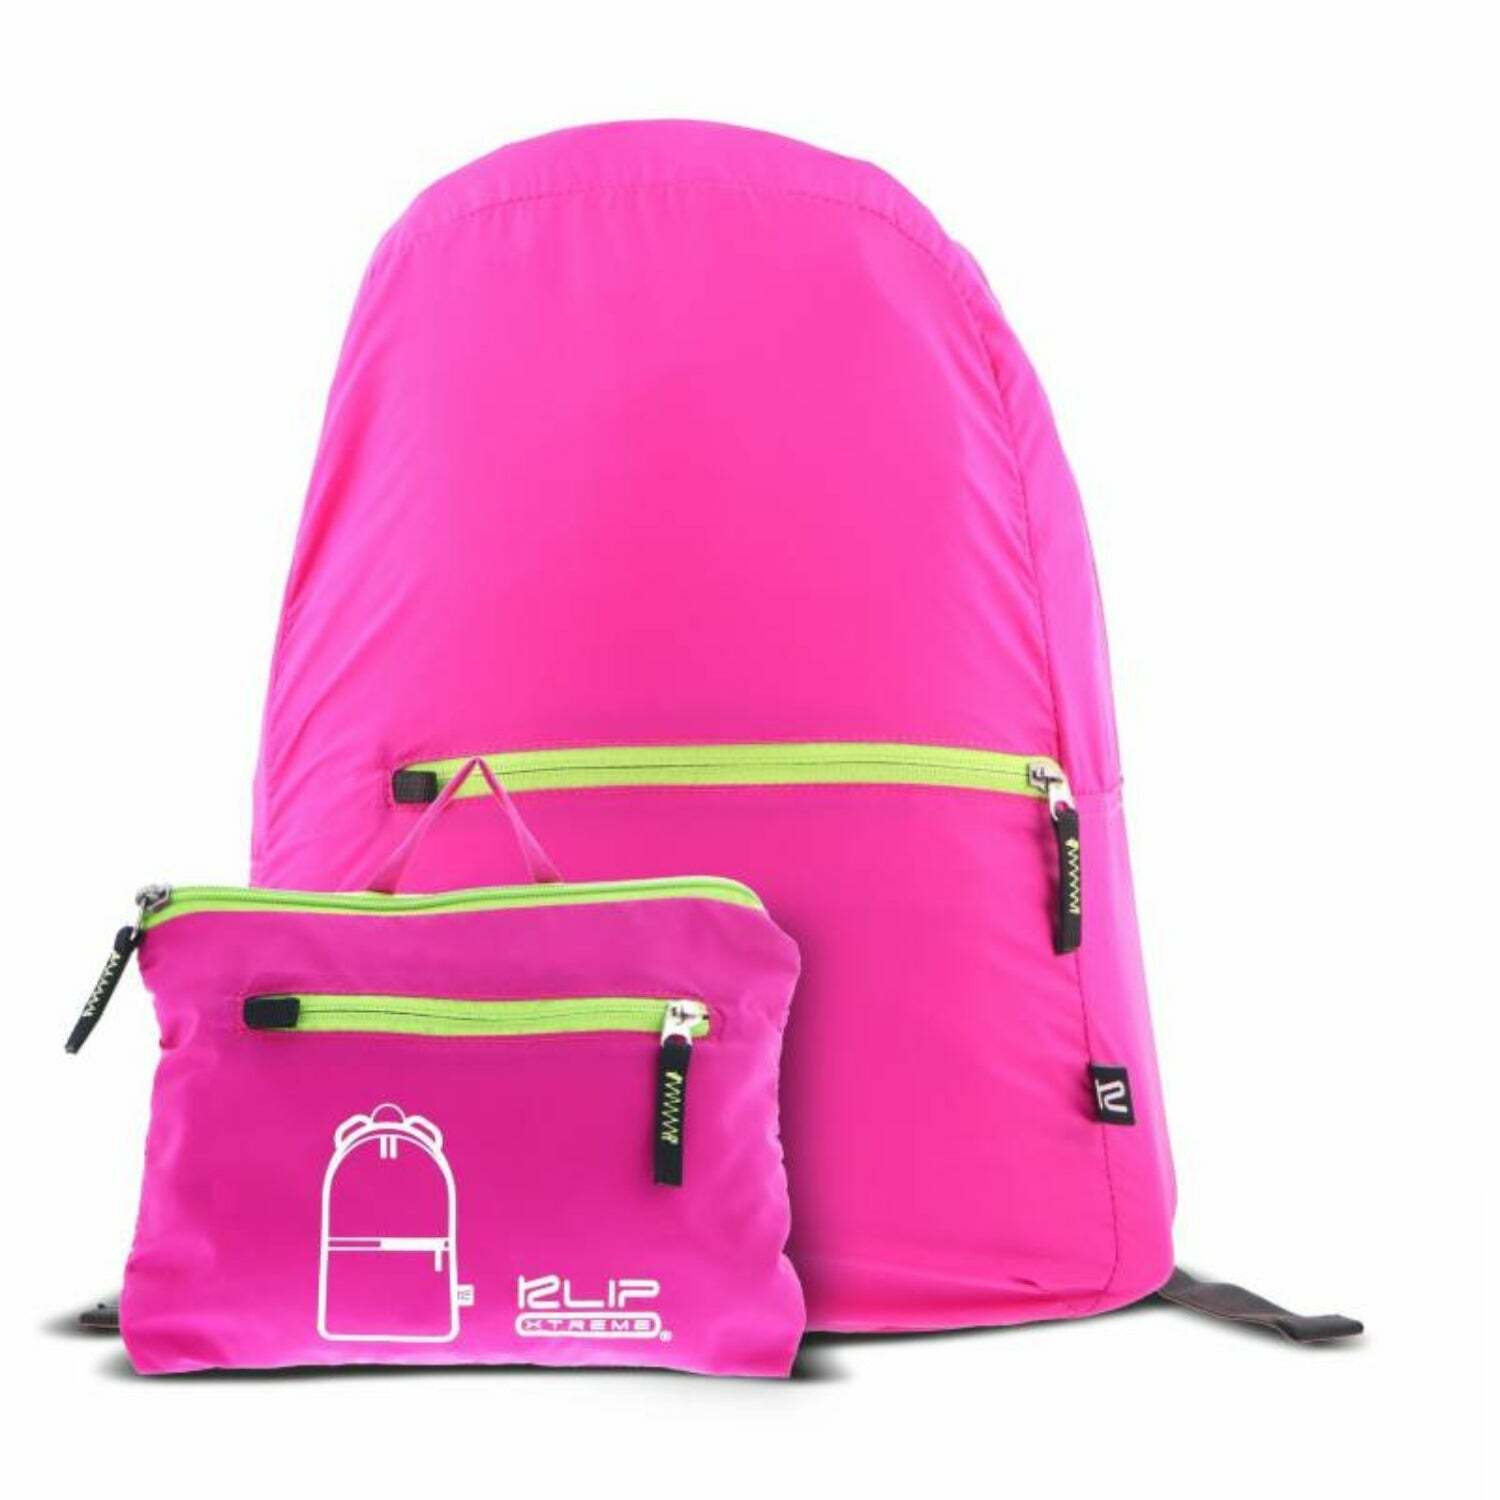 Klip Xtreme - Backpack Waterproof Nylon Fabric, Lightweight Bag - Neon Pink